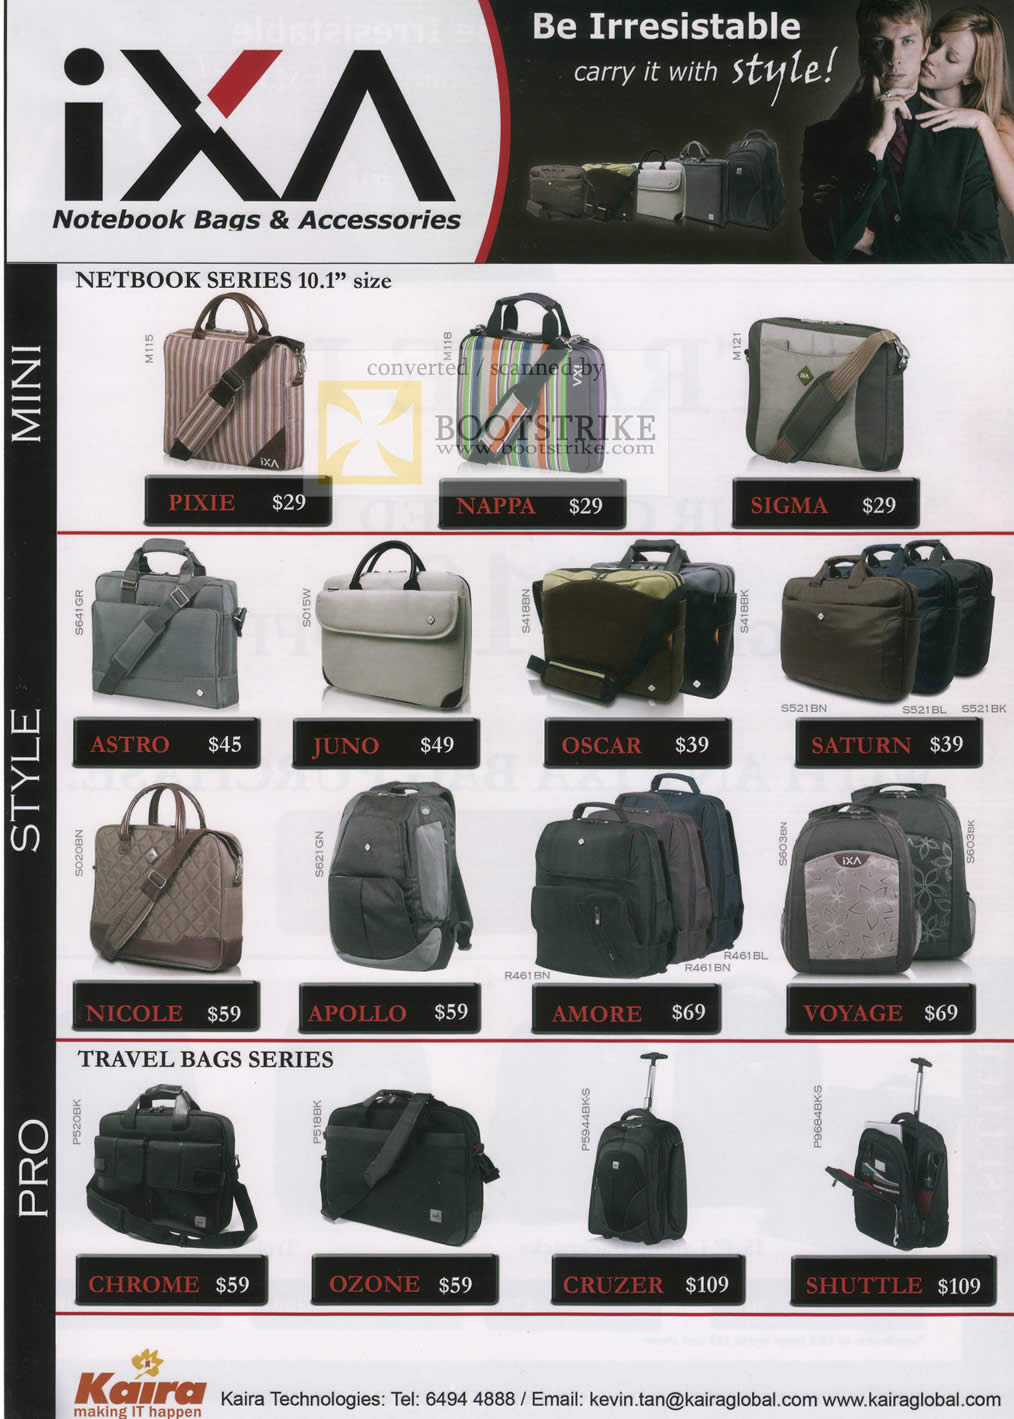 Sitex 2009 price list image brochure of IXA Notebook Bags Accessories Pixie Nappa Sigma Nicole Apollo Travel Bags Netbook